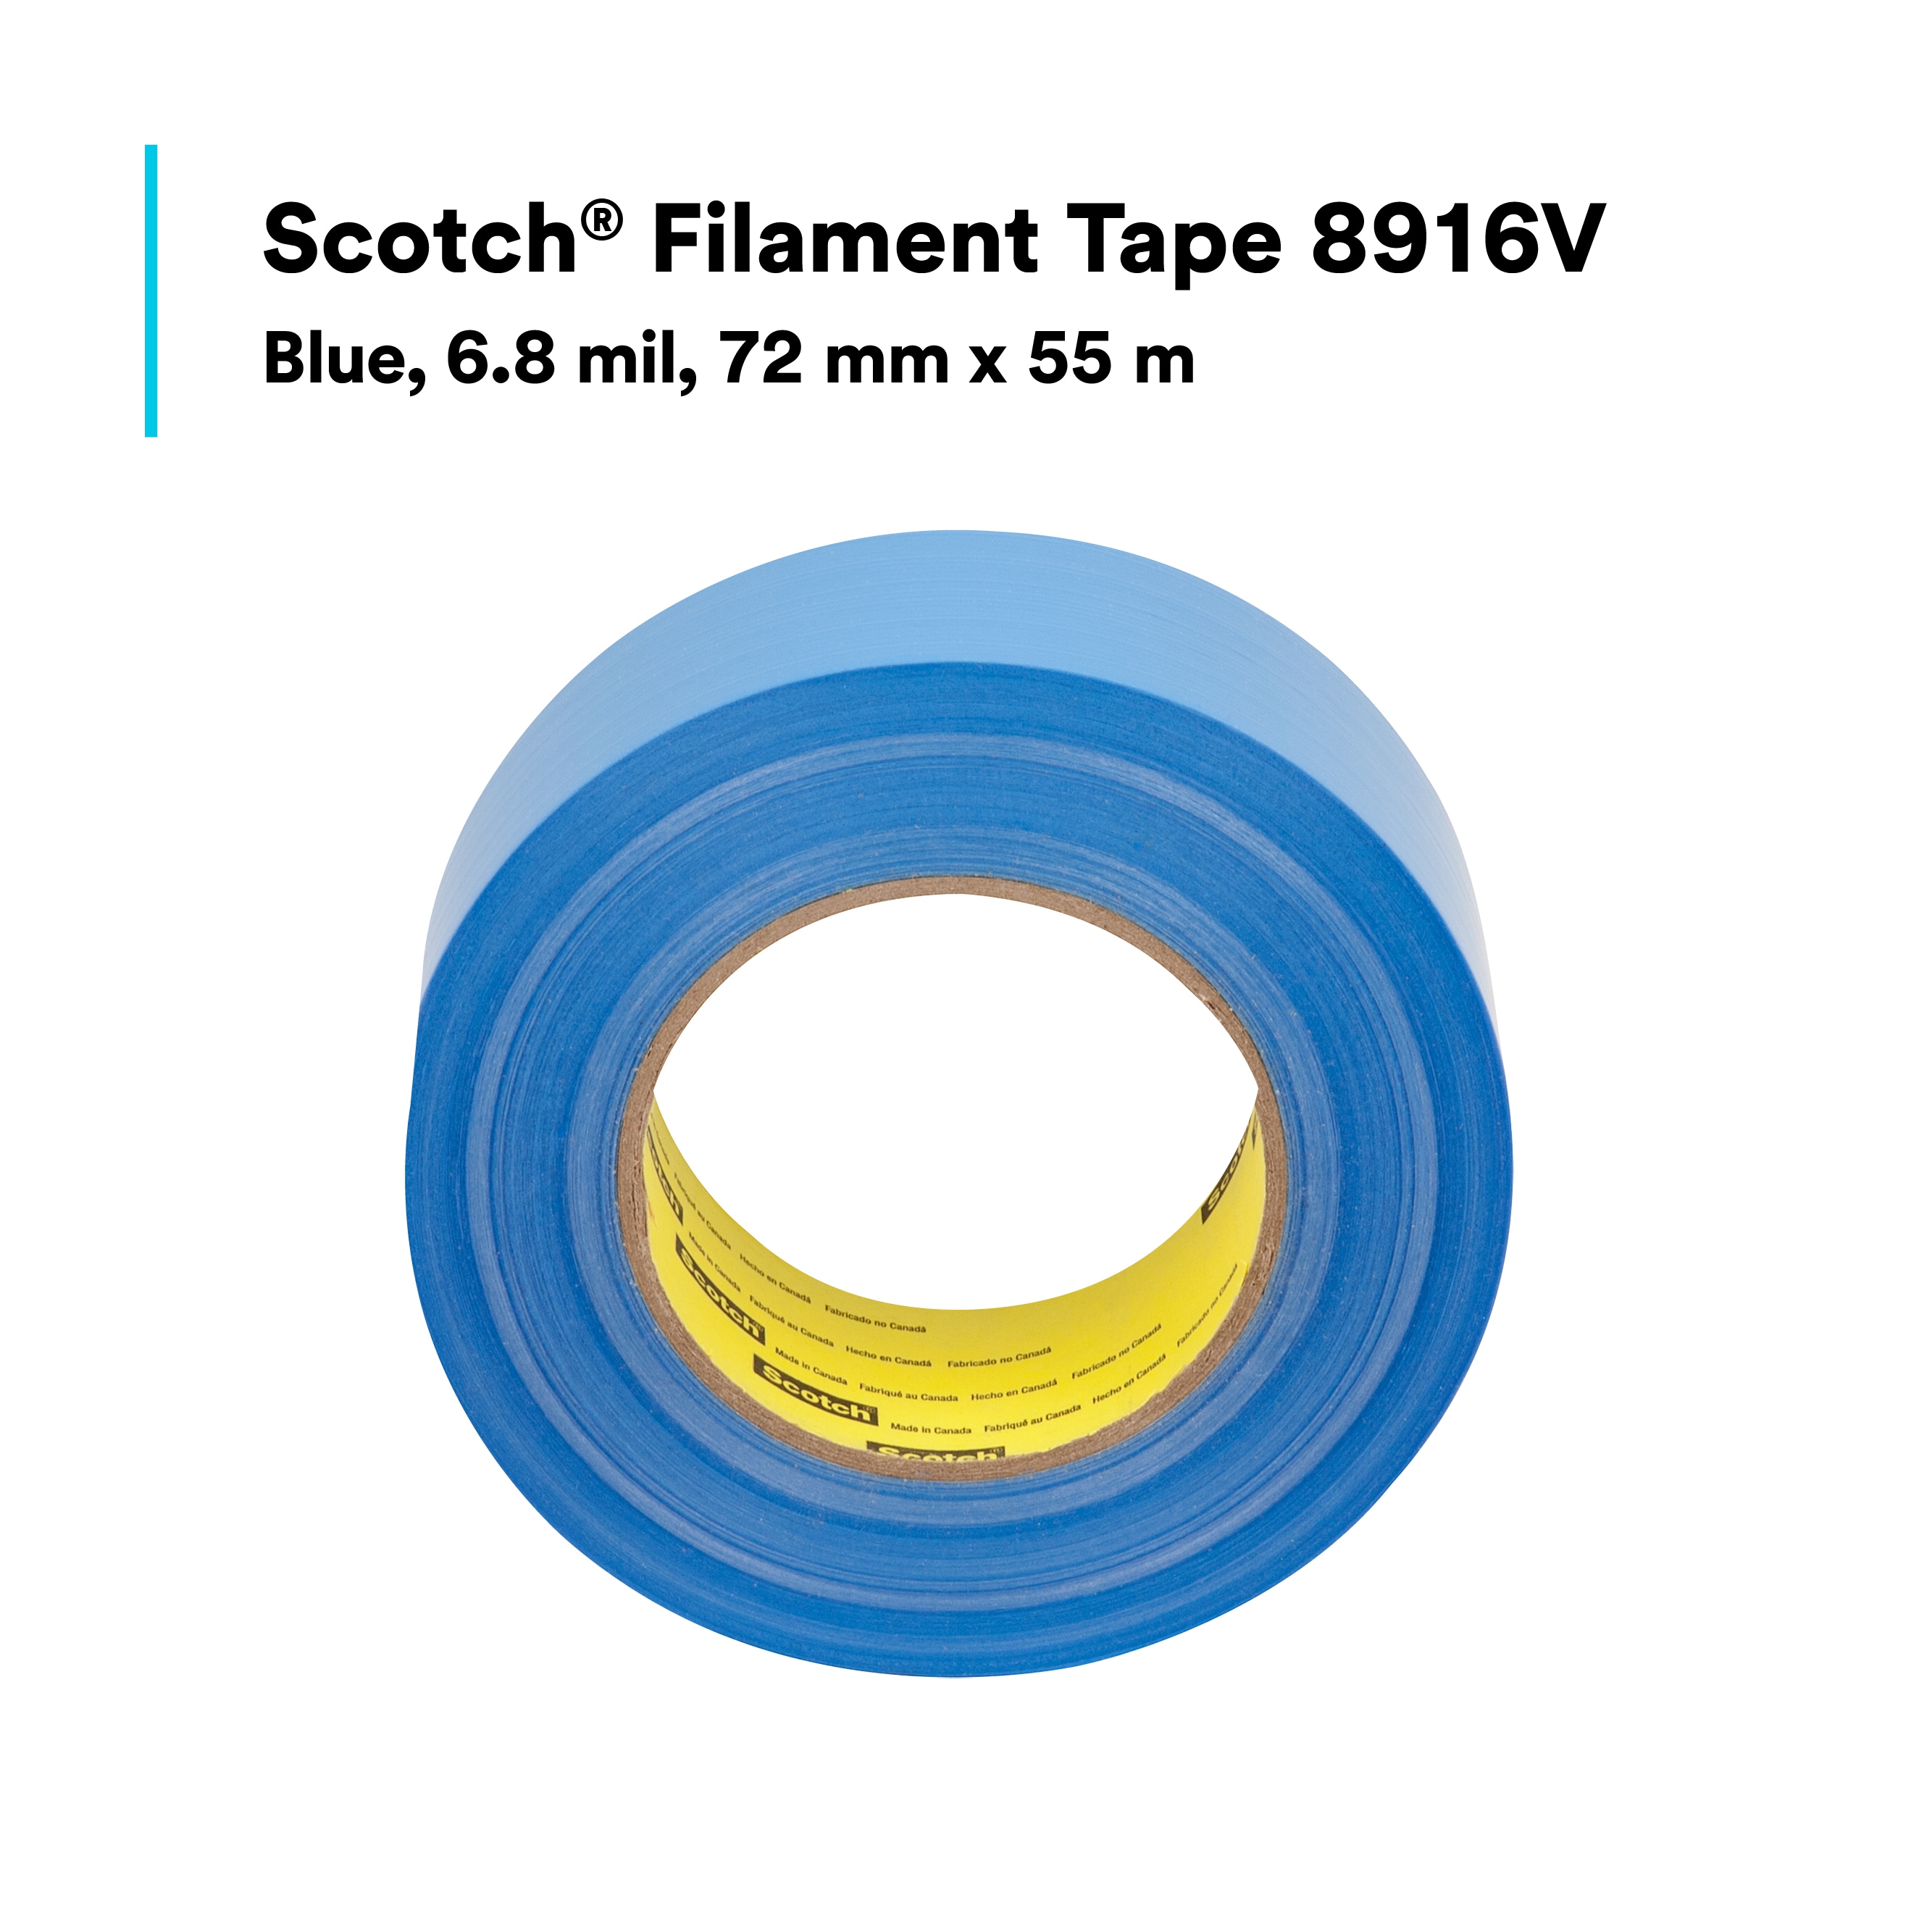 SKU 7100115258 | Scotch® Filament Tape 8916V